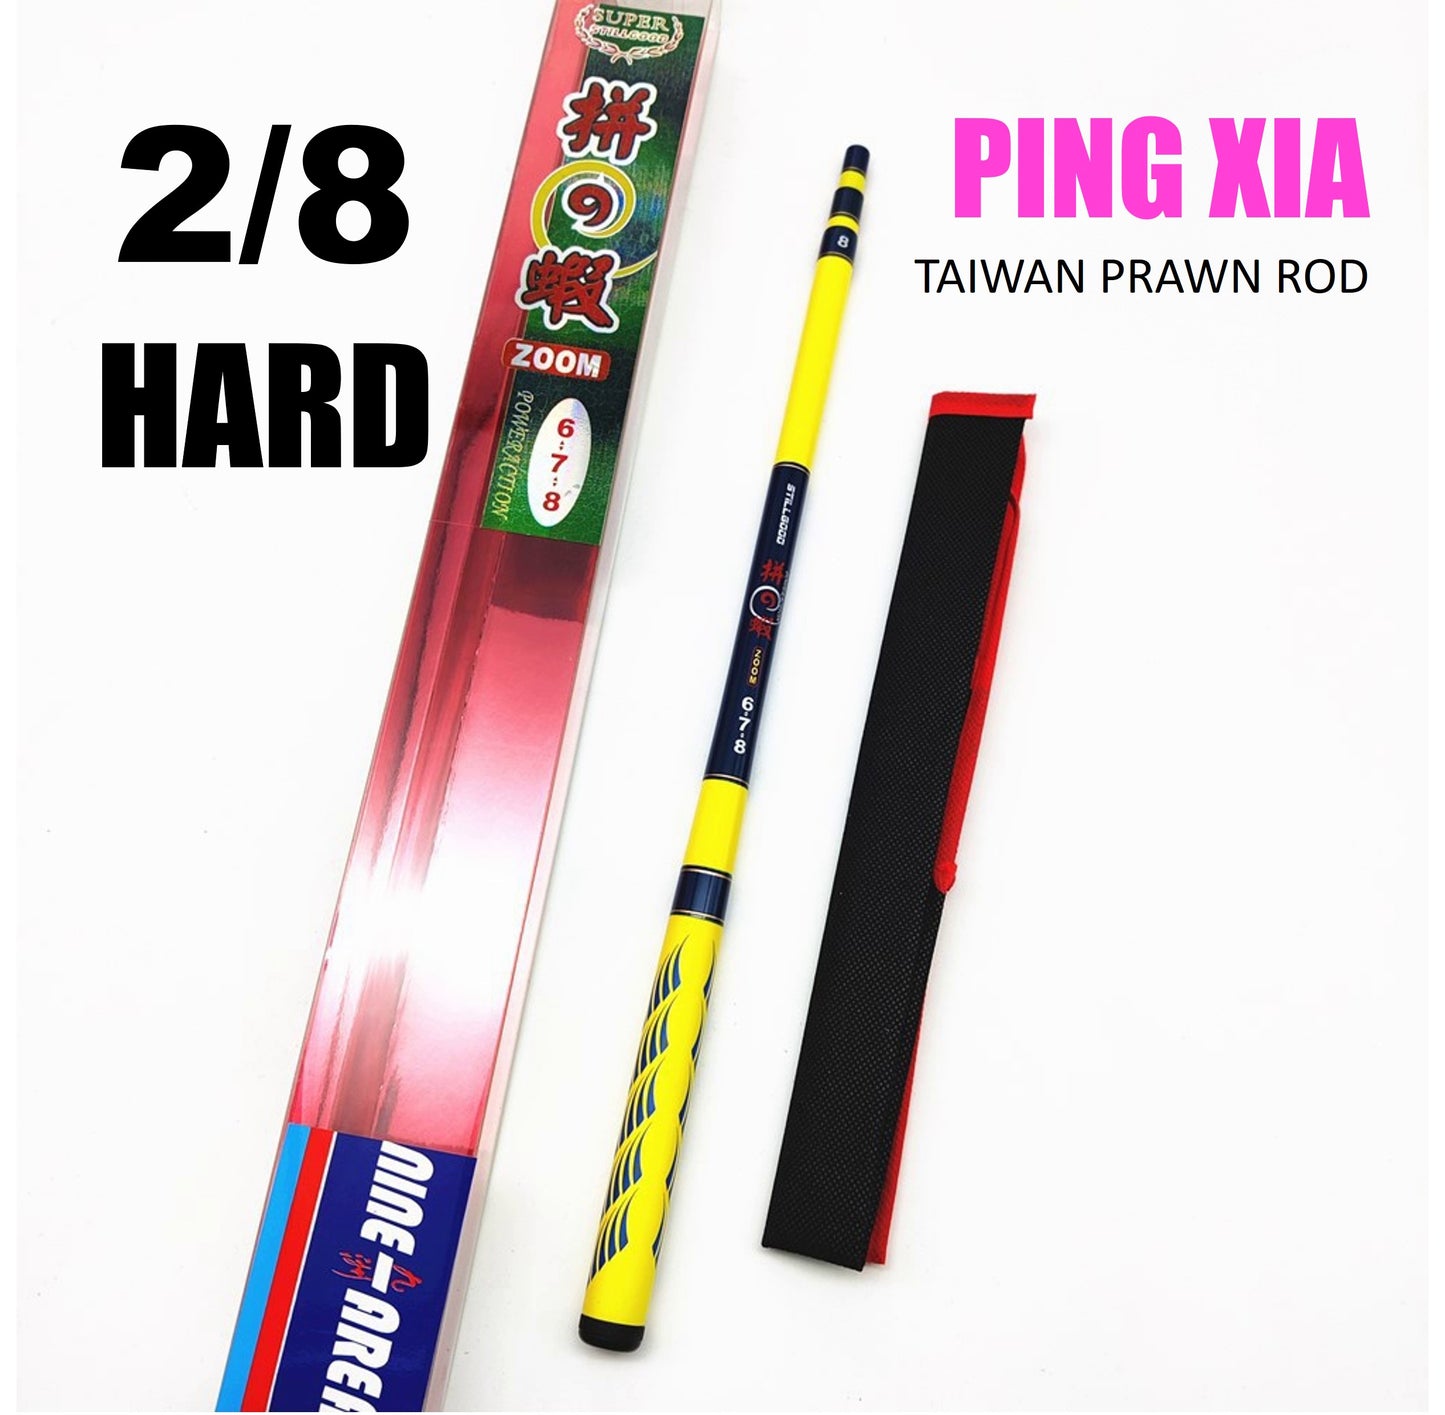 Ping Xia Prawn rod PR035